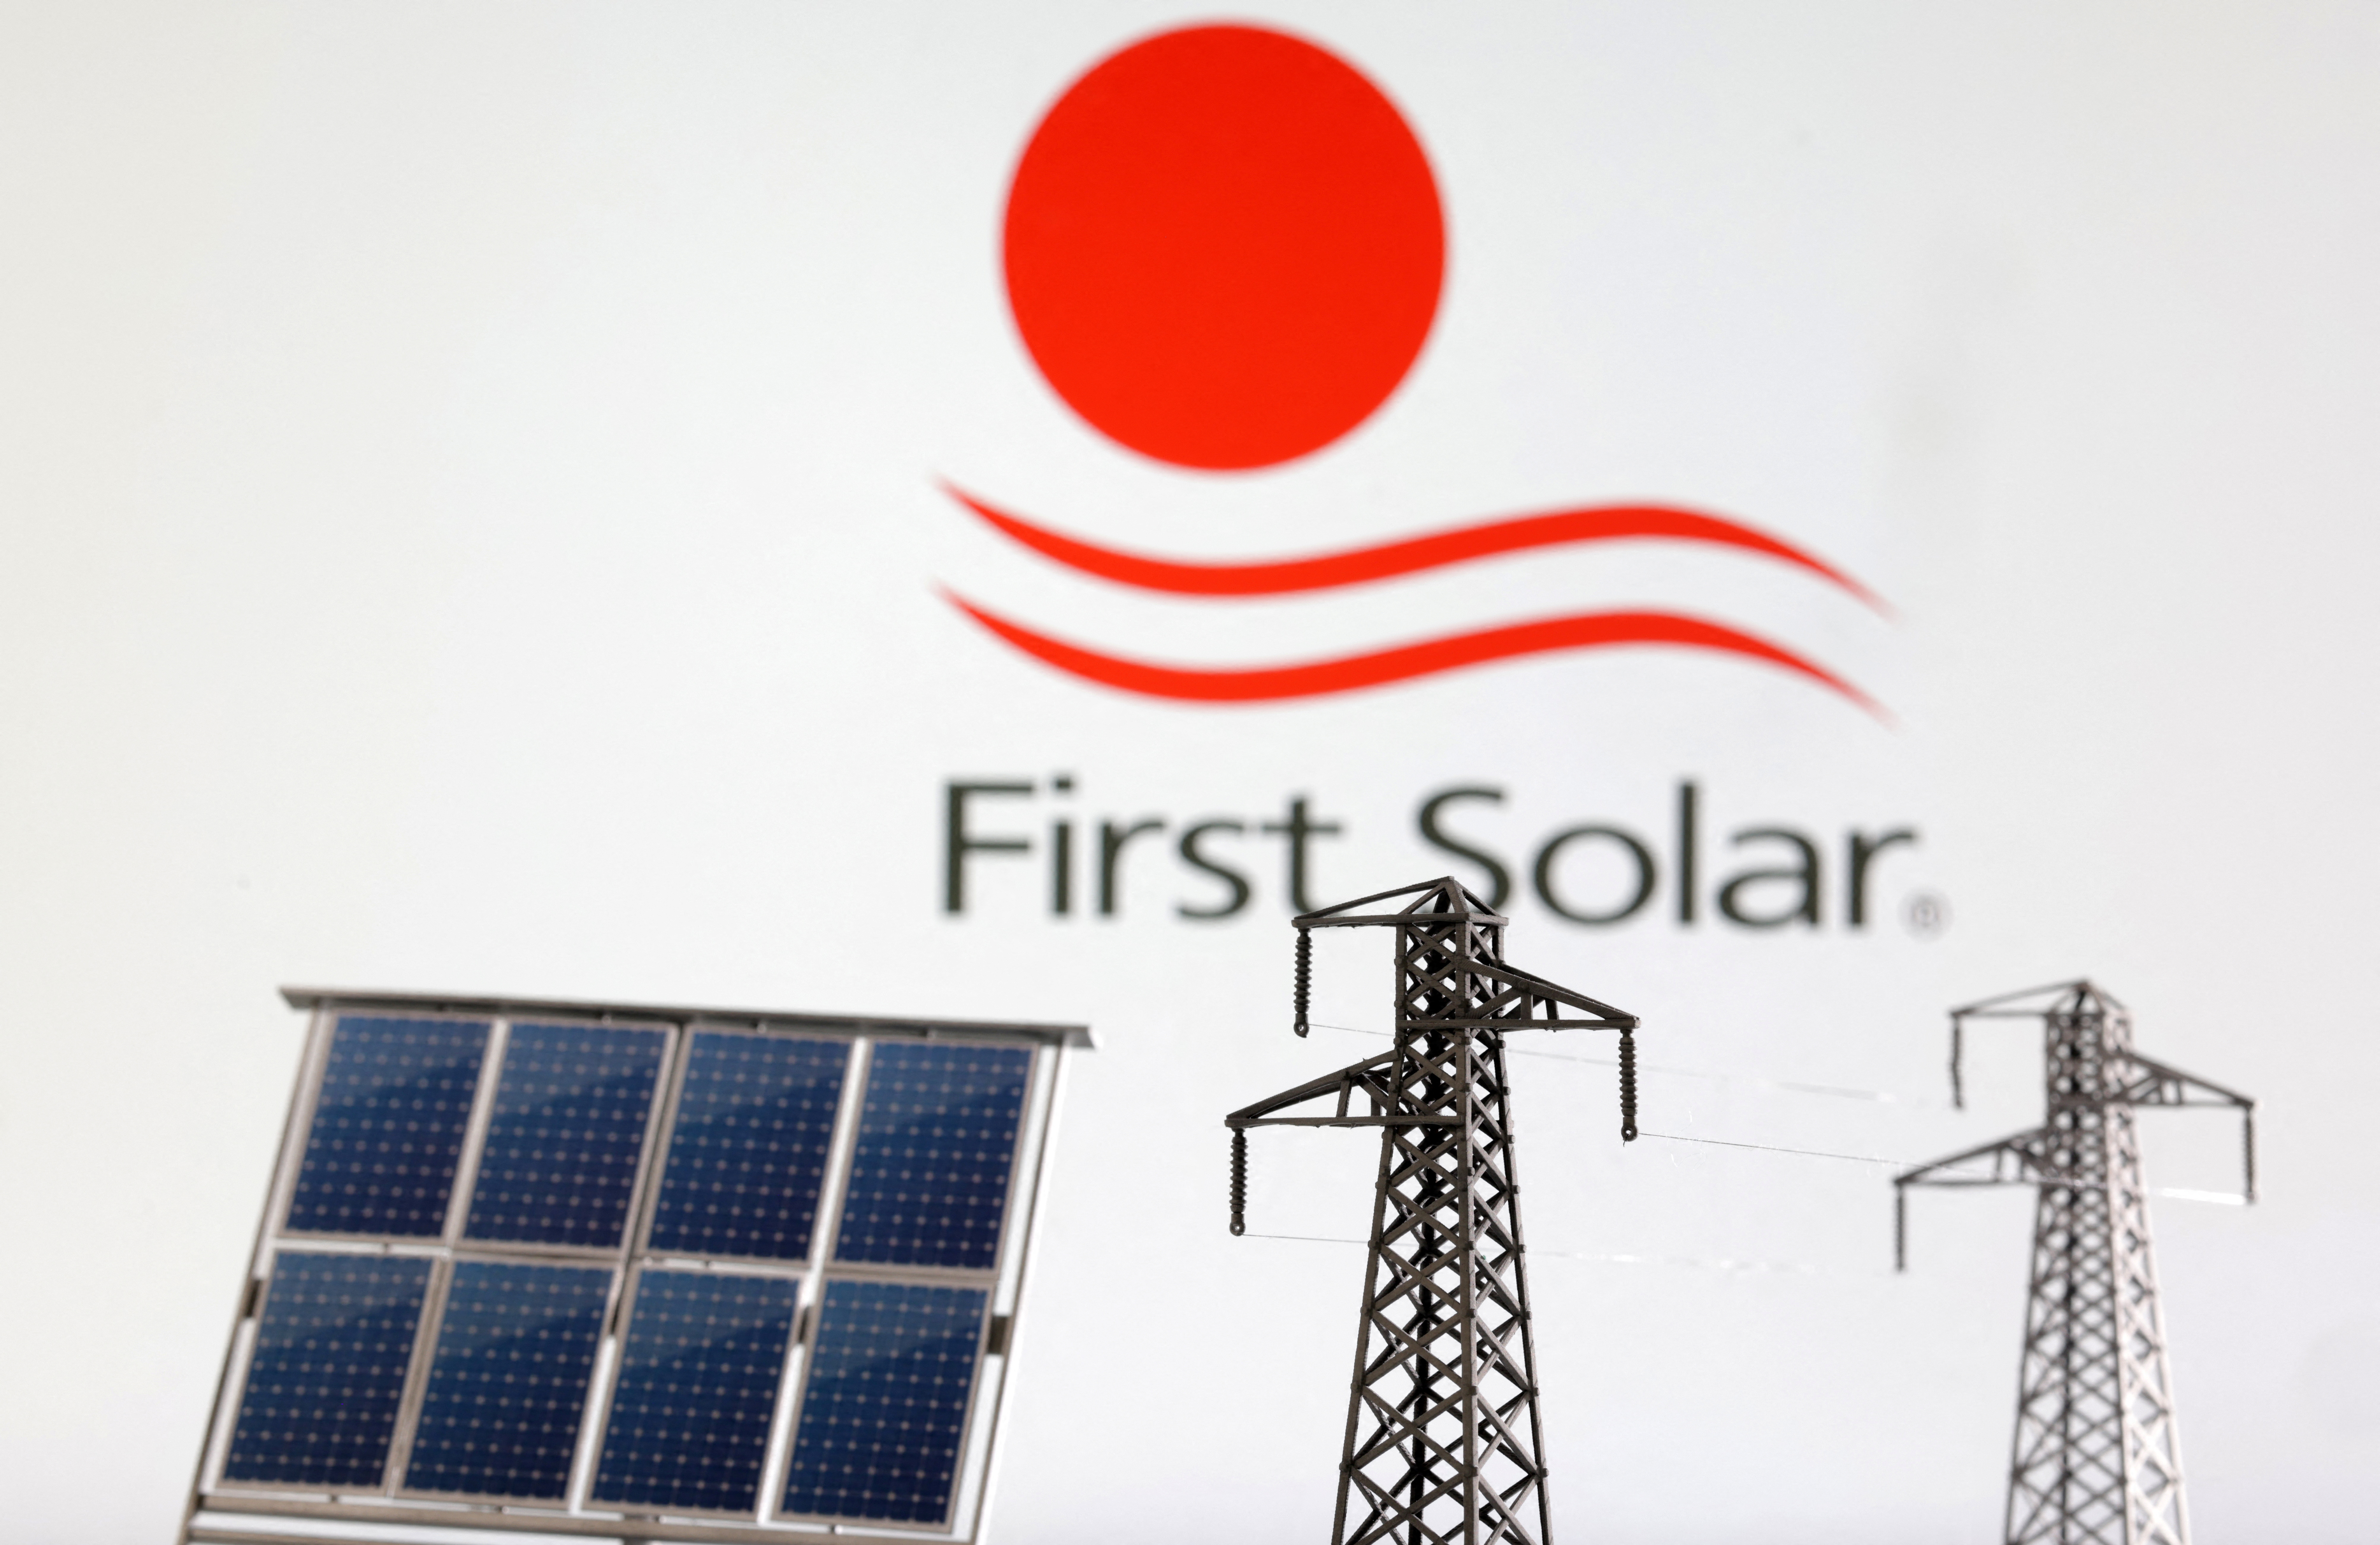 Illustration shows First Solar logo